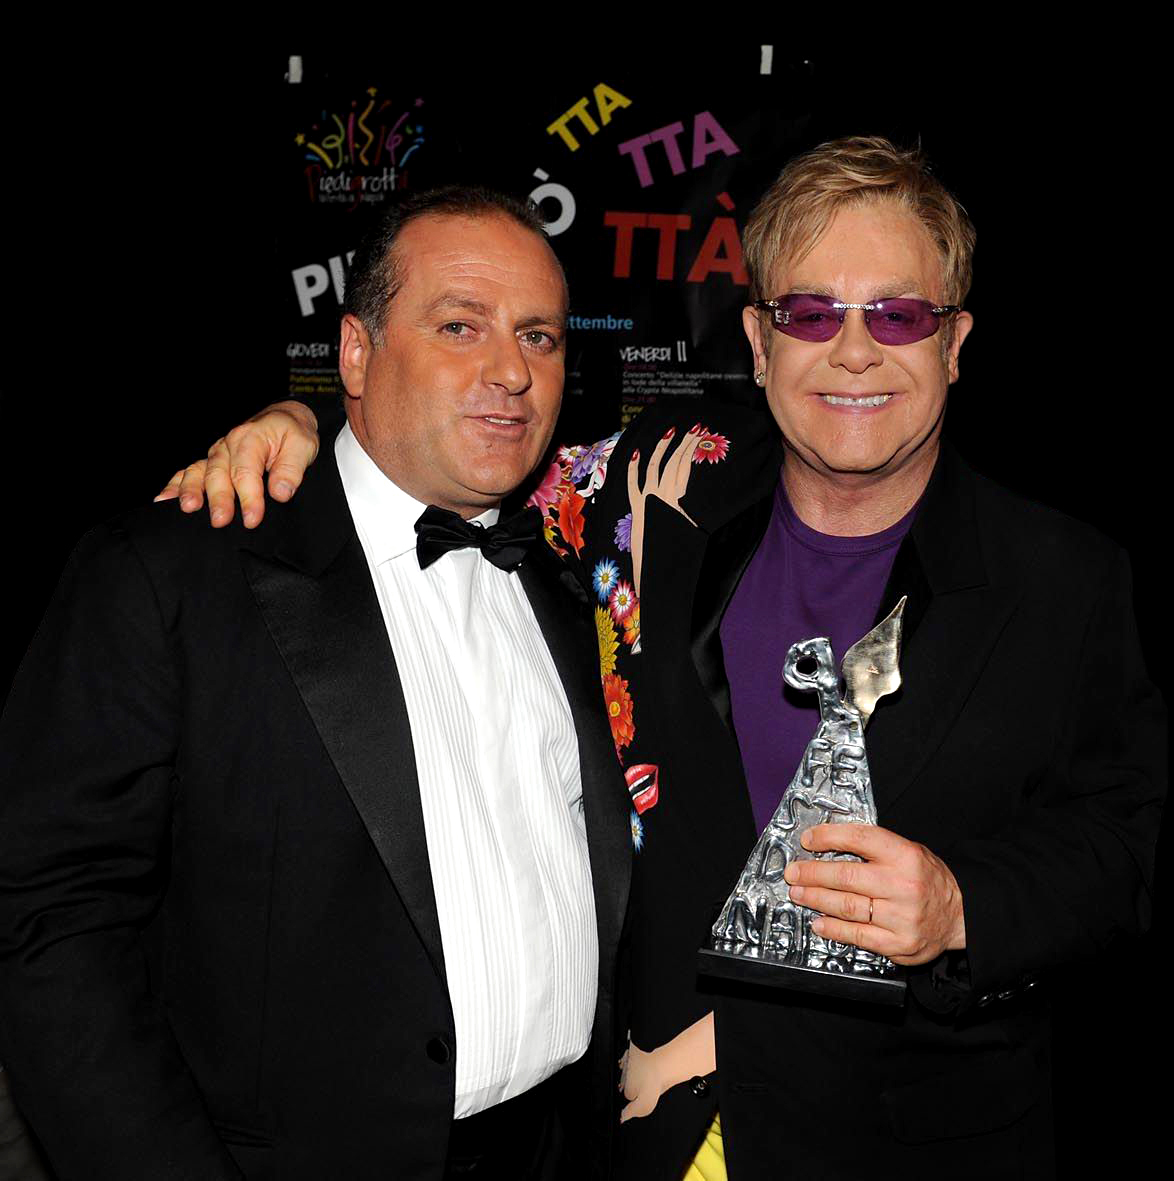 Elton John Live in Naples, Italy. 9/11/2009.